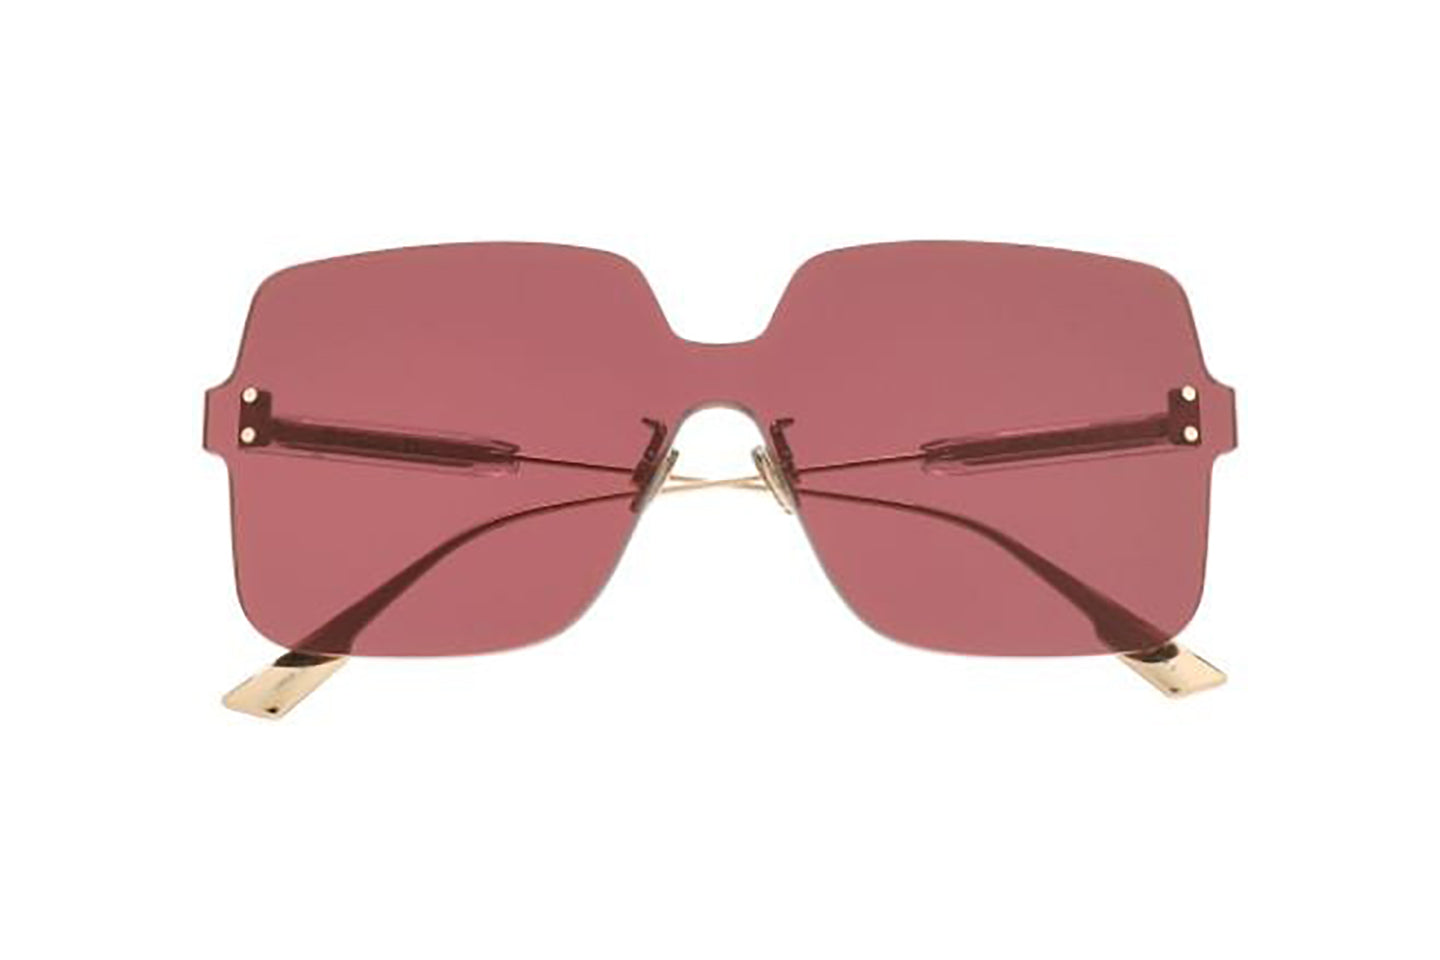 Christian Dior Color Quake 1 Square Sunglasses  Pink Sunglasses  Accessories  CHR245542  The RealReal